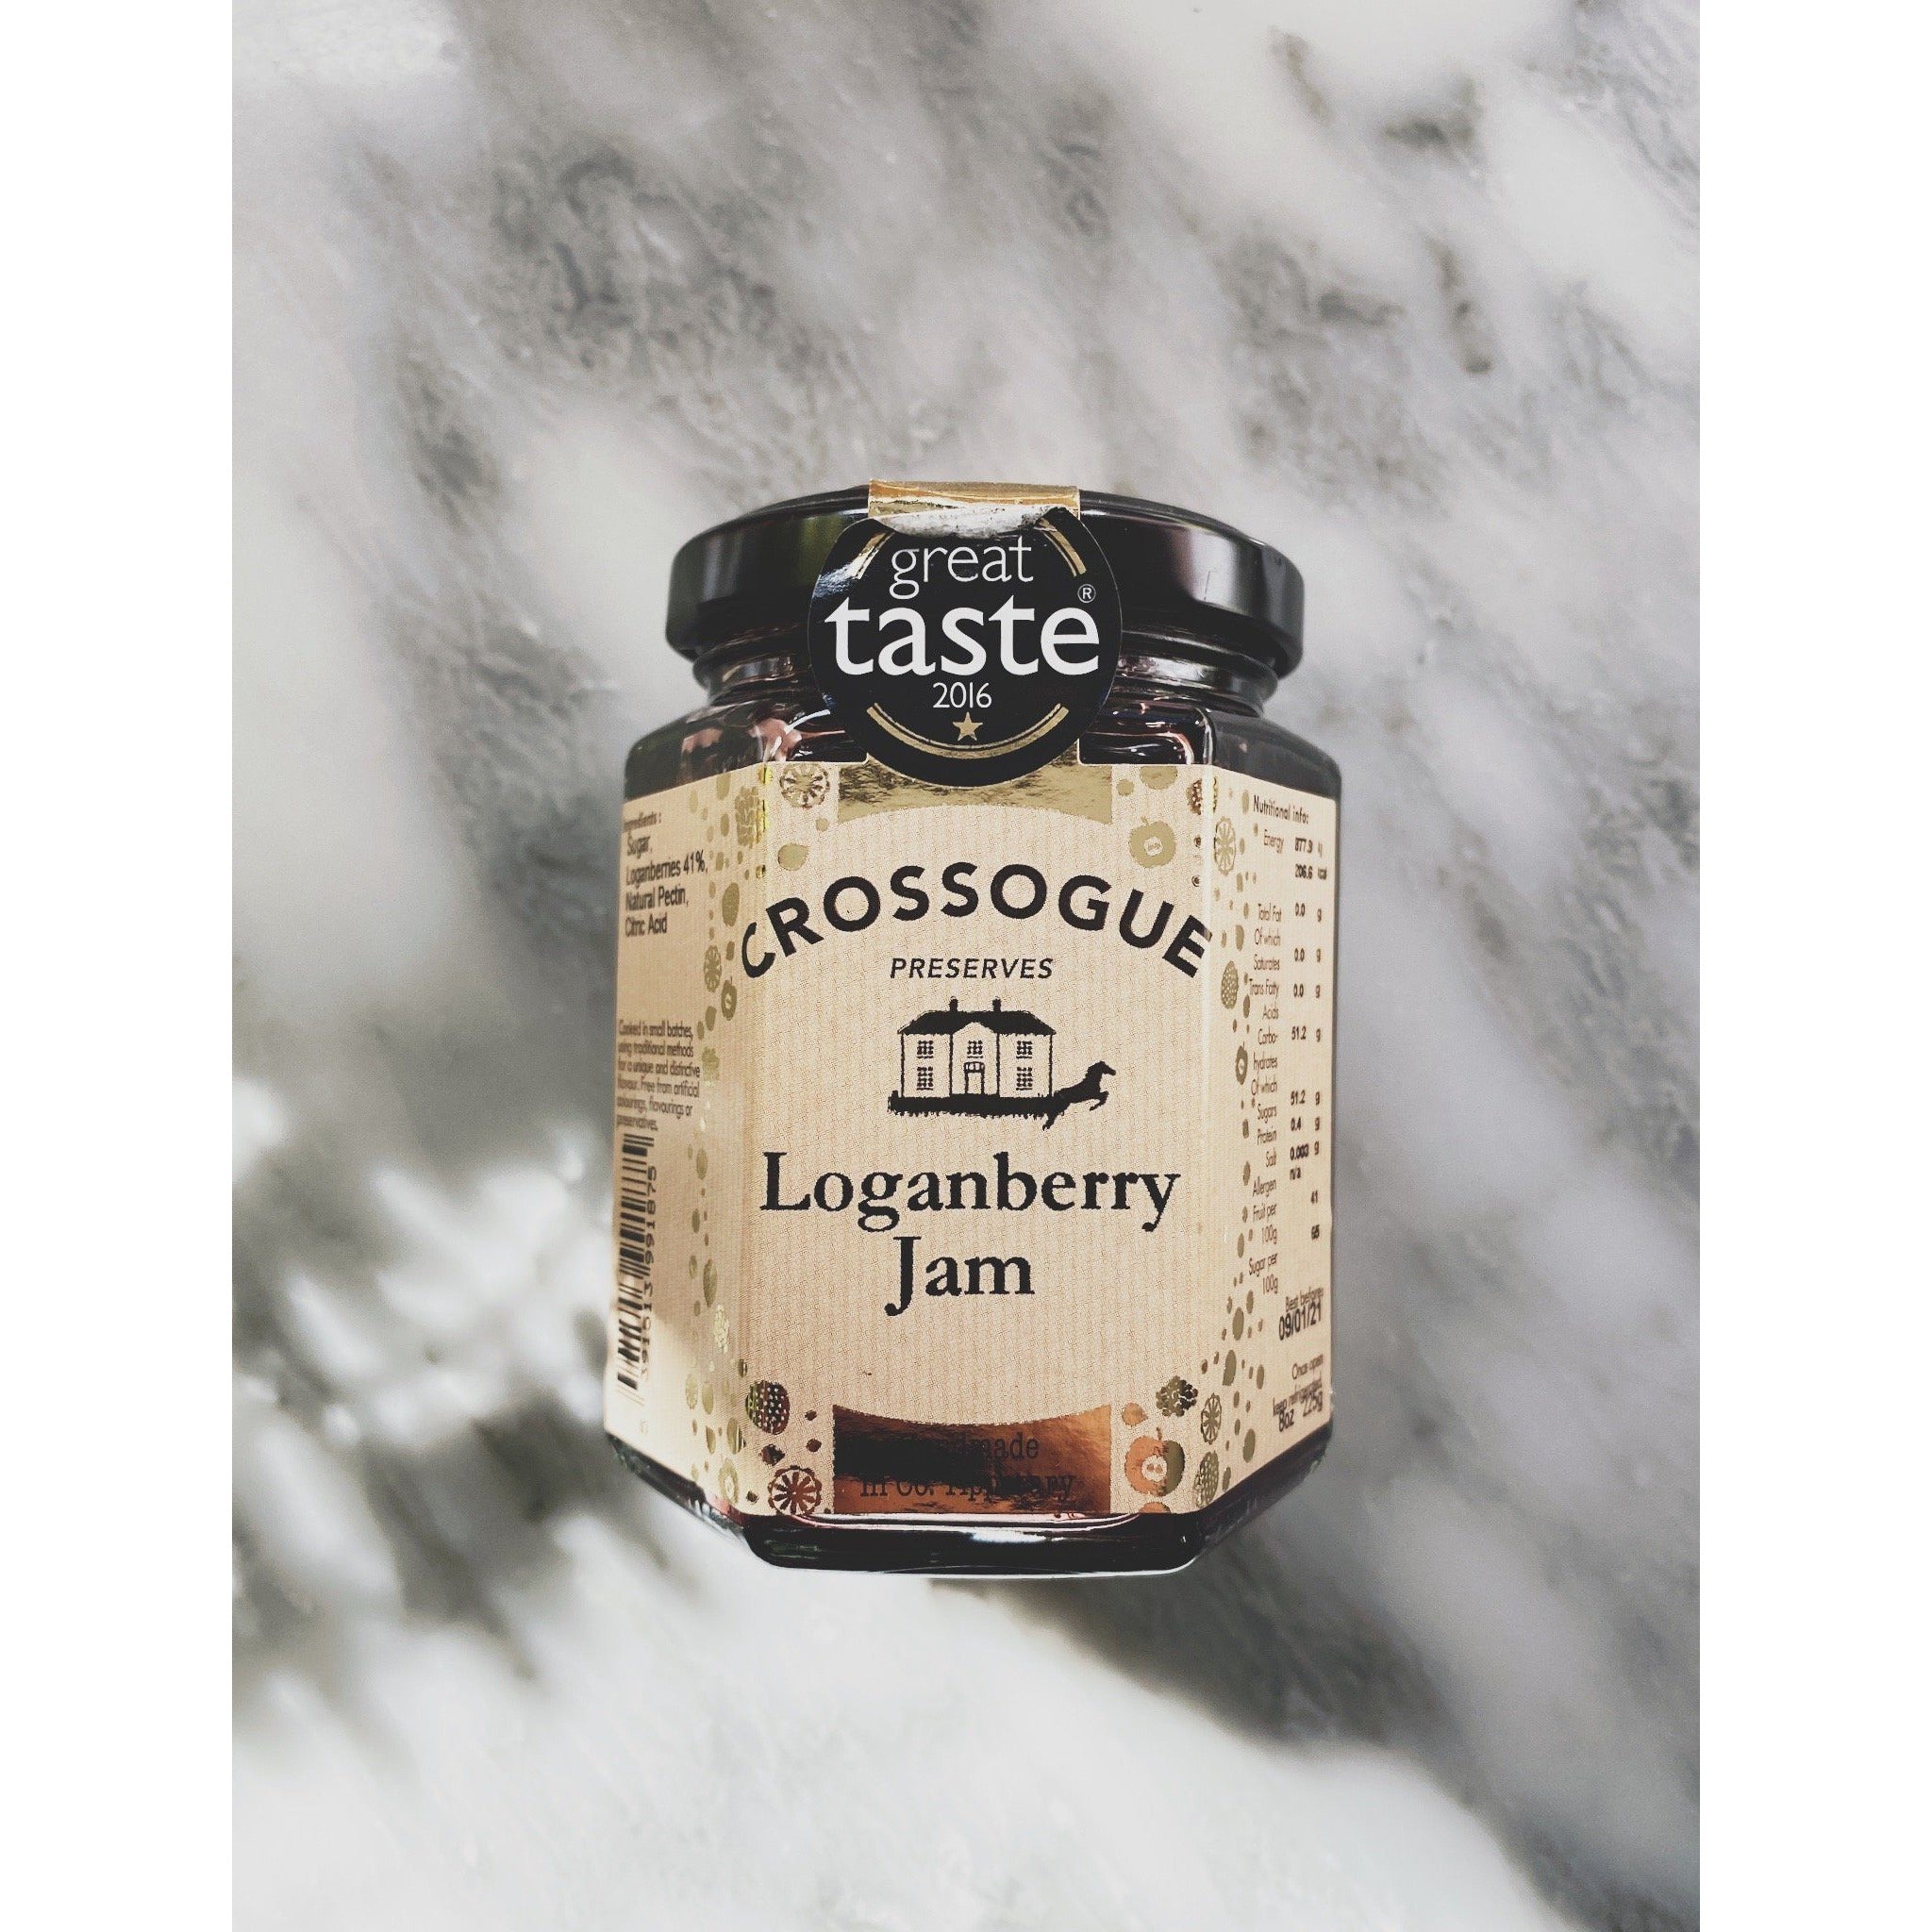 Crossogue Preserves - Loganberry Jam - Kate's Kitchen